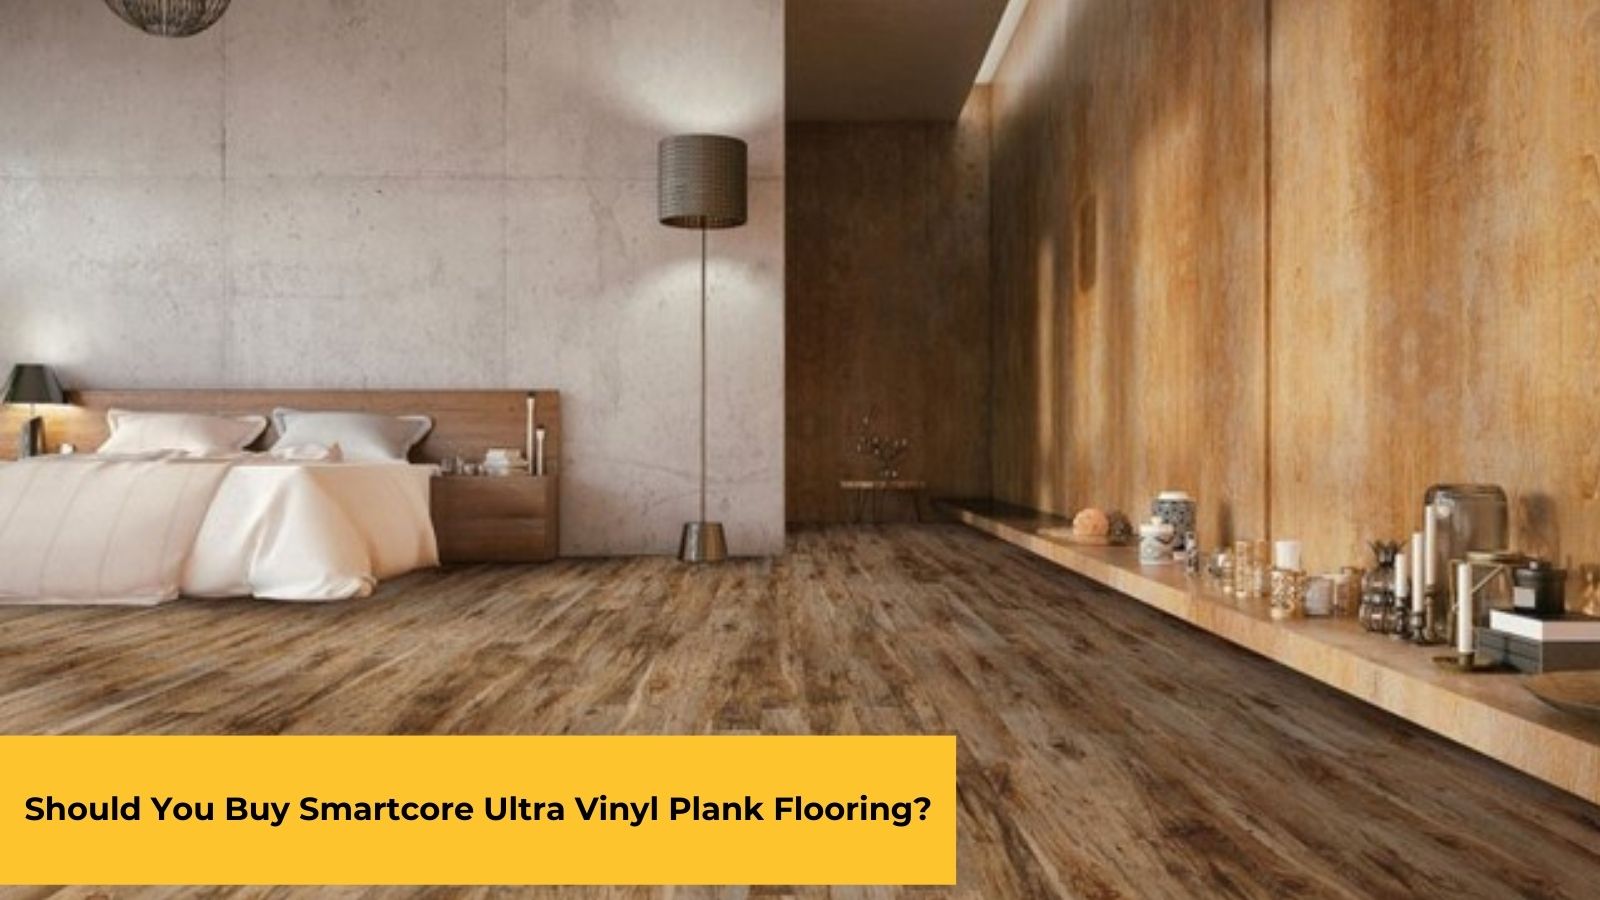 Should You Buy Smartcore Ultra Vinyl Plank Flooring?